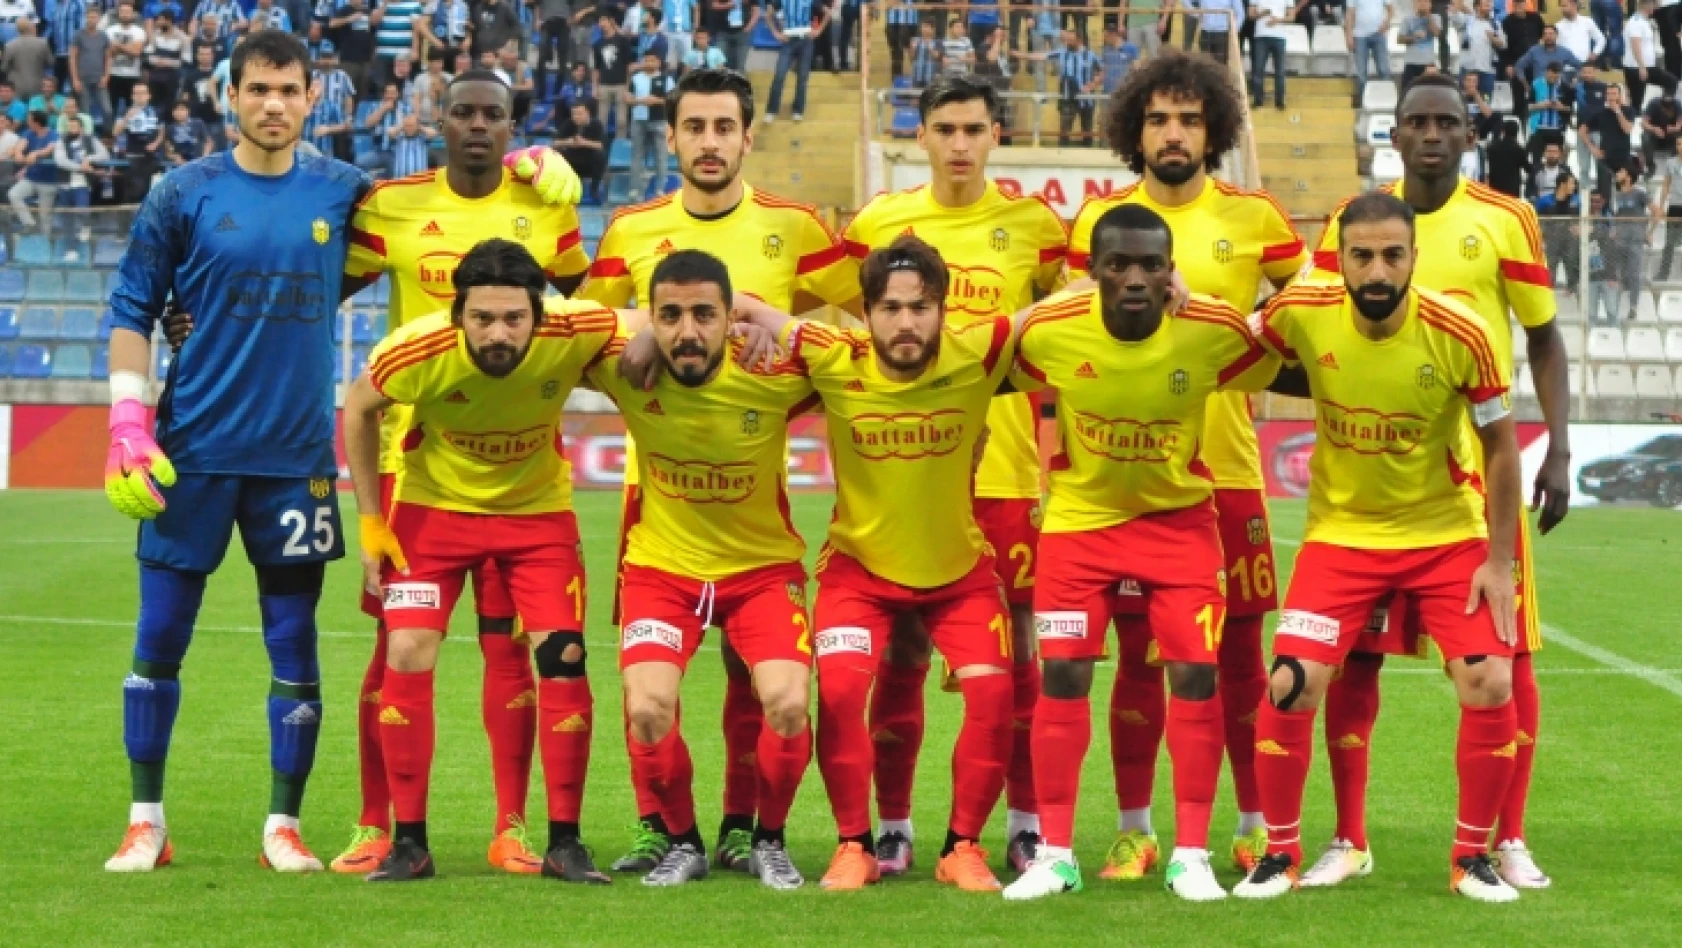 Adana Demirspor 1 - 2 Evkur Yeni Malatyaspor (Foto Galeri)